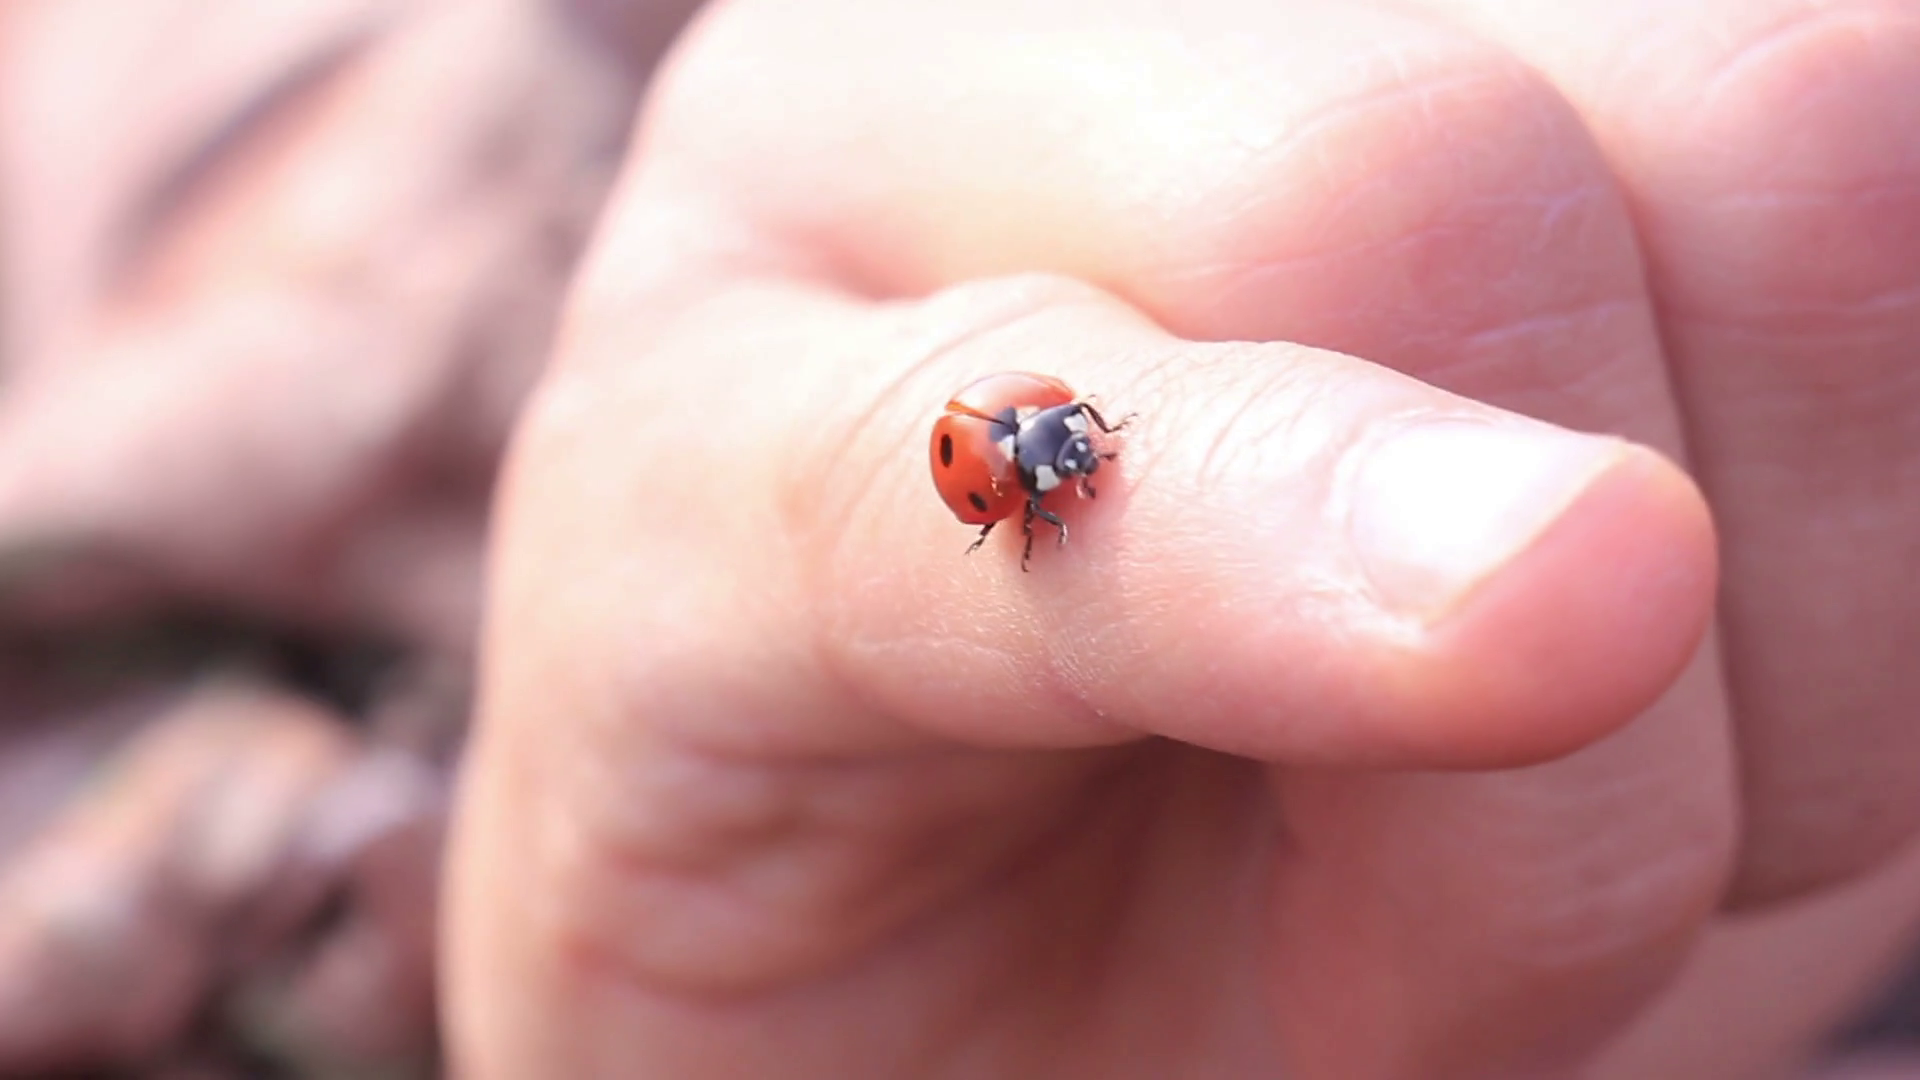 Ladybird Hand Crawling Ladybug Macro Stock Video Footage - VideoBlocks